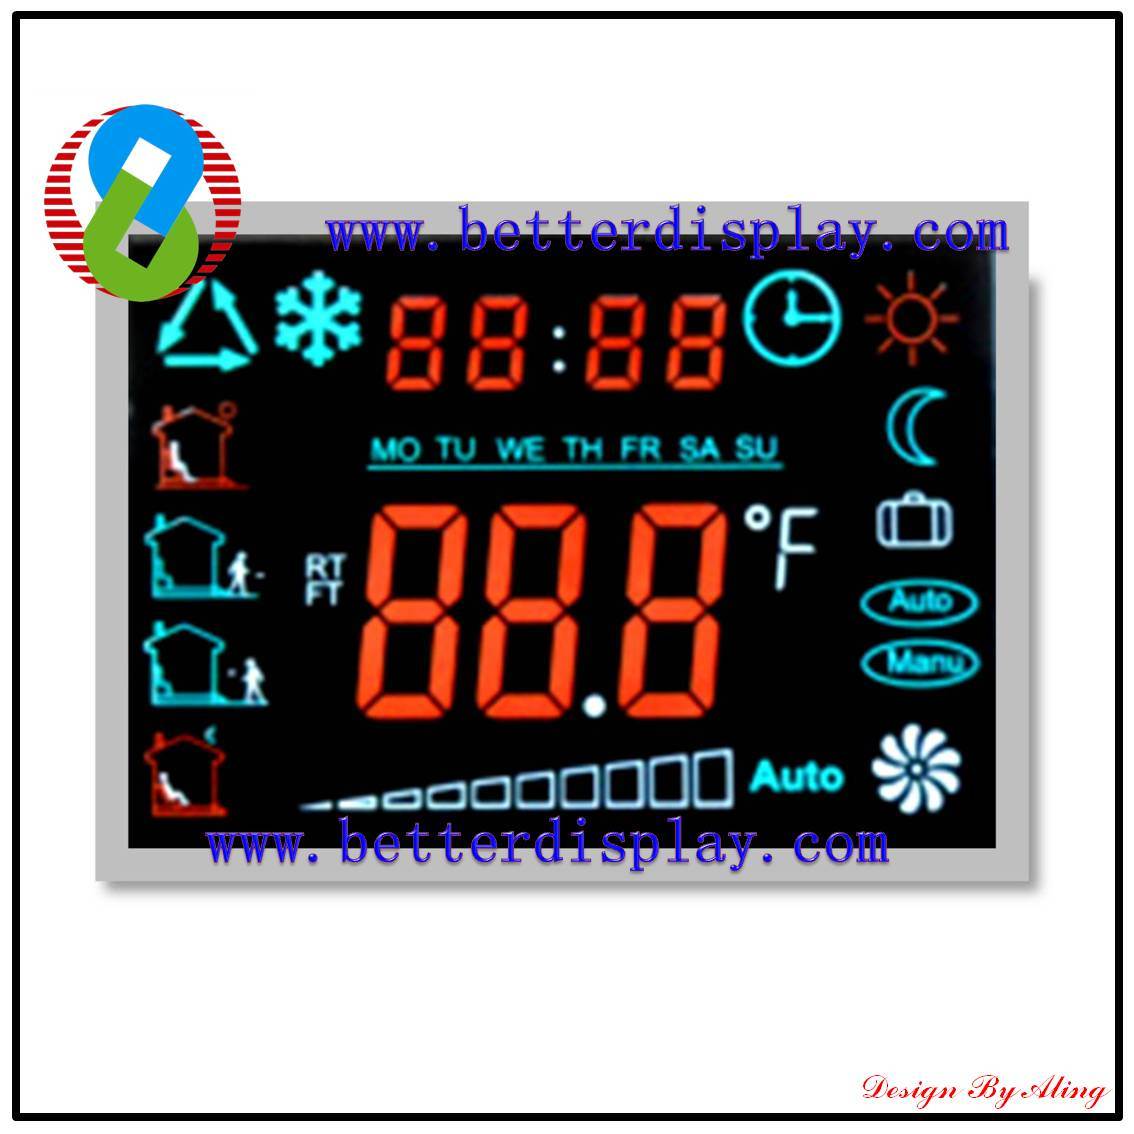 Better Va LCD Panel Customized LCD Display